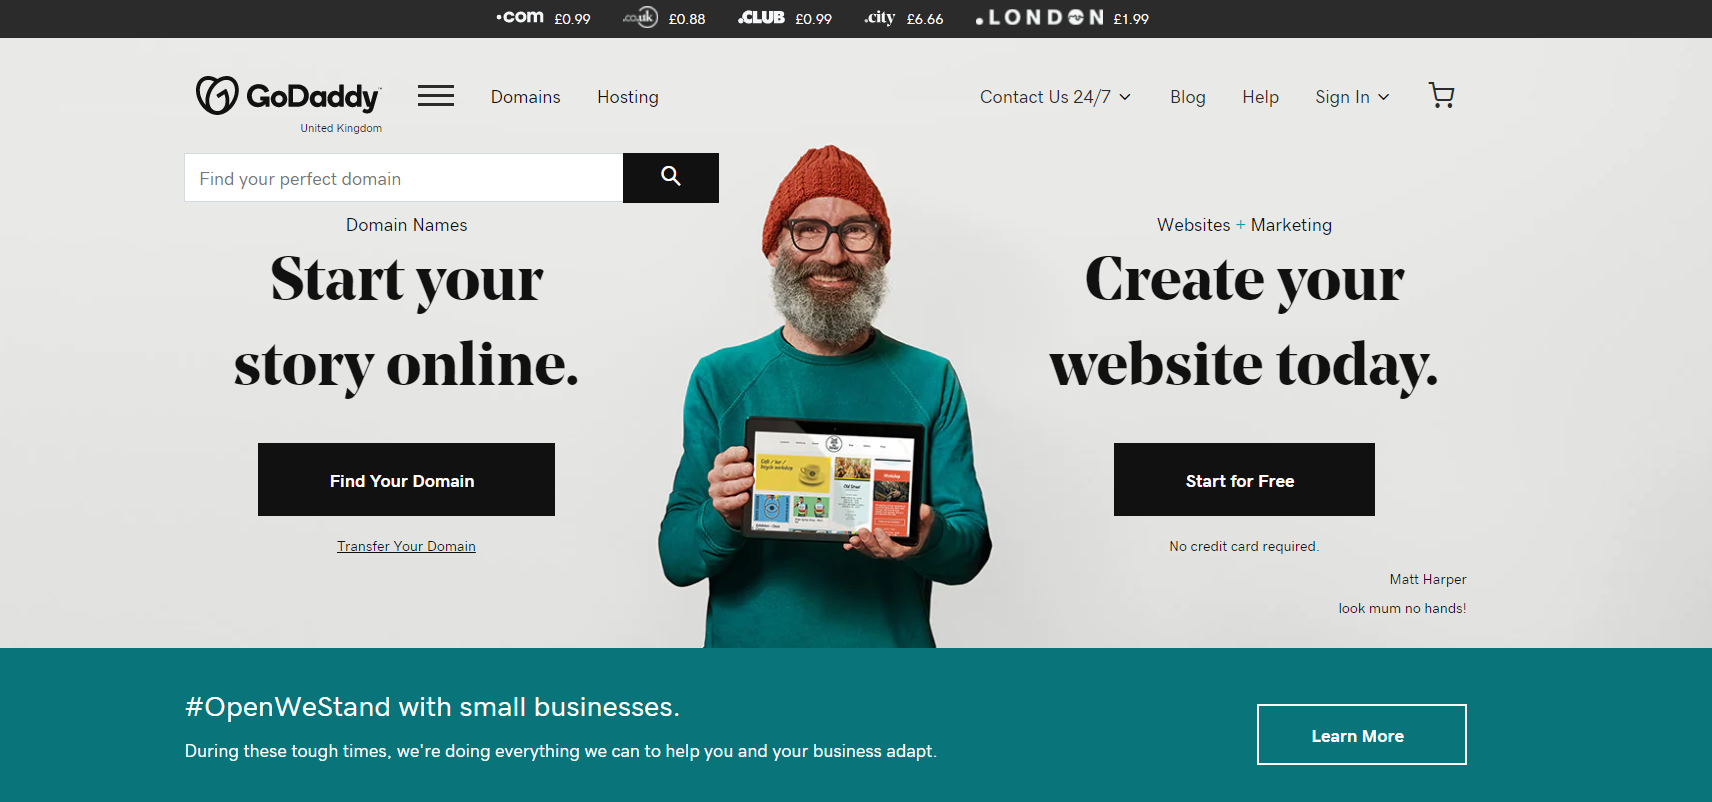 GoDaddy's minimalist website design